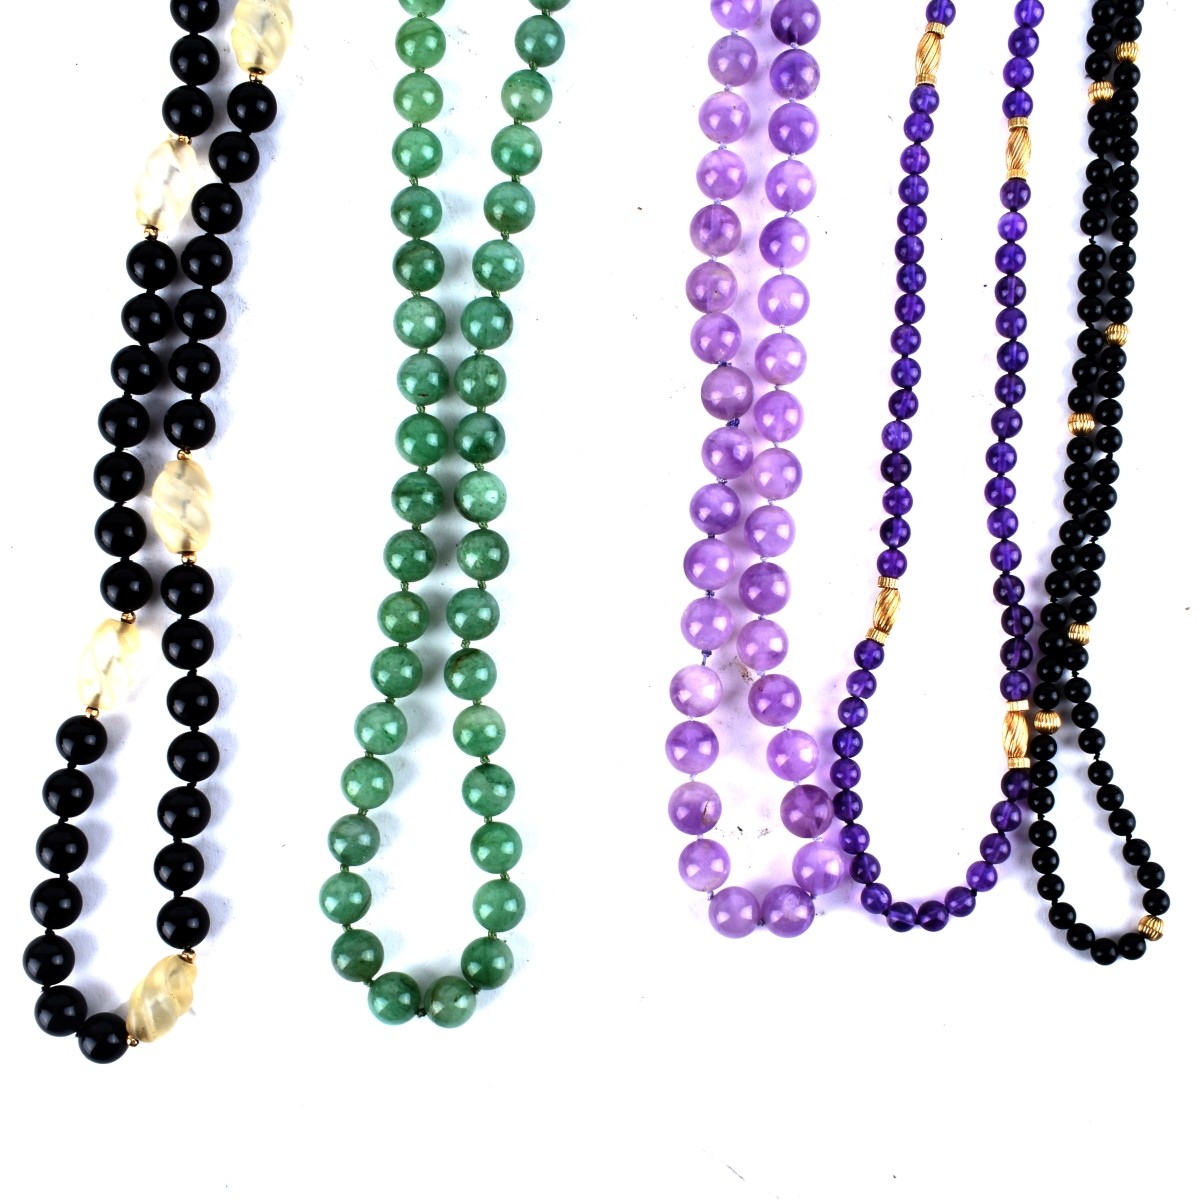 Five Gemstone Bead Necklaces